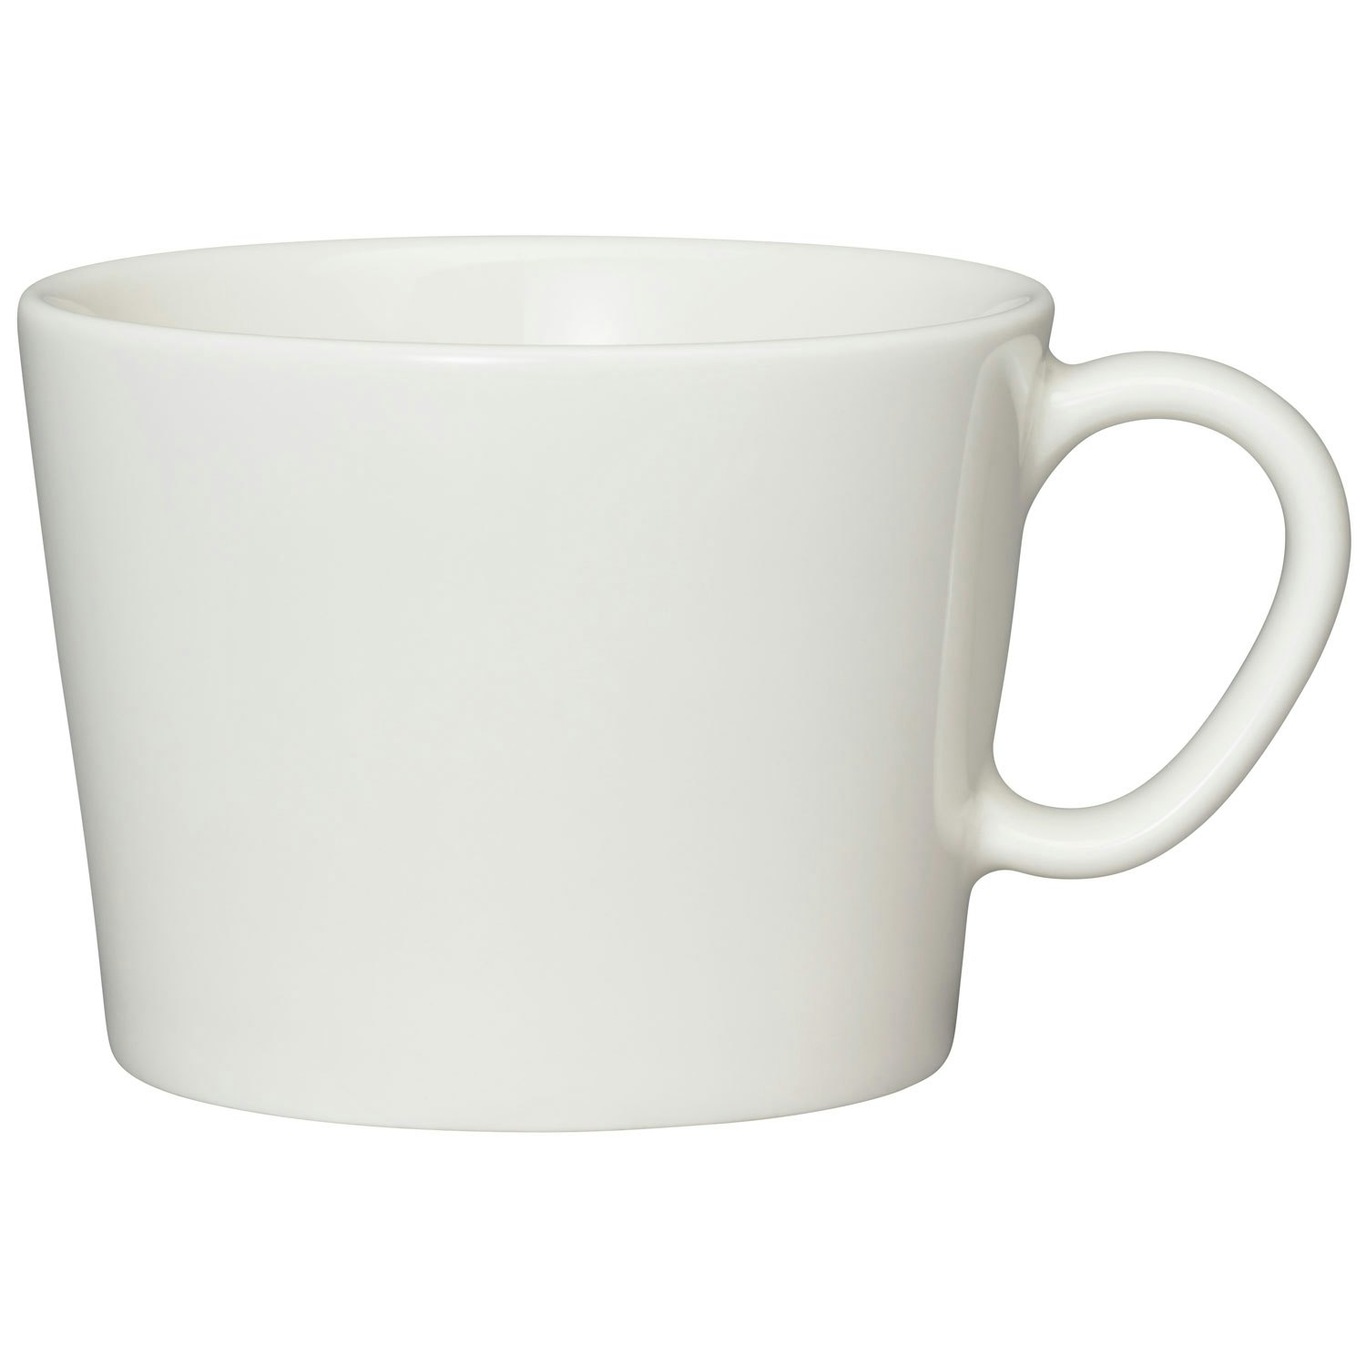 Mainio Cup White, 17 cl